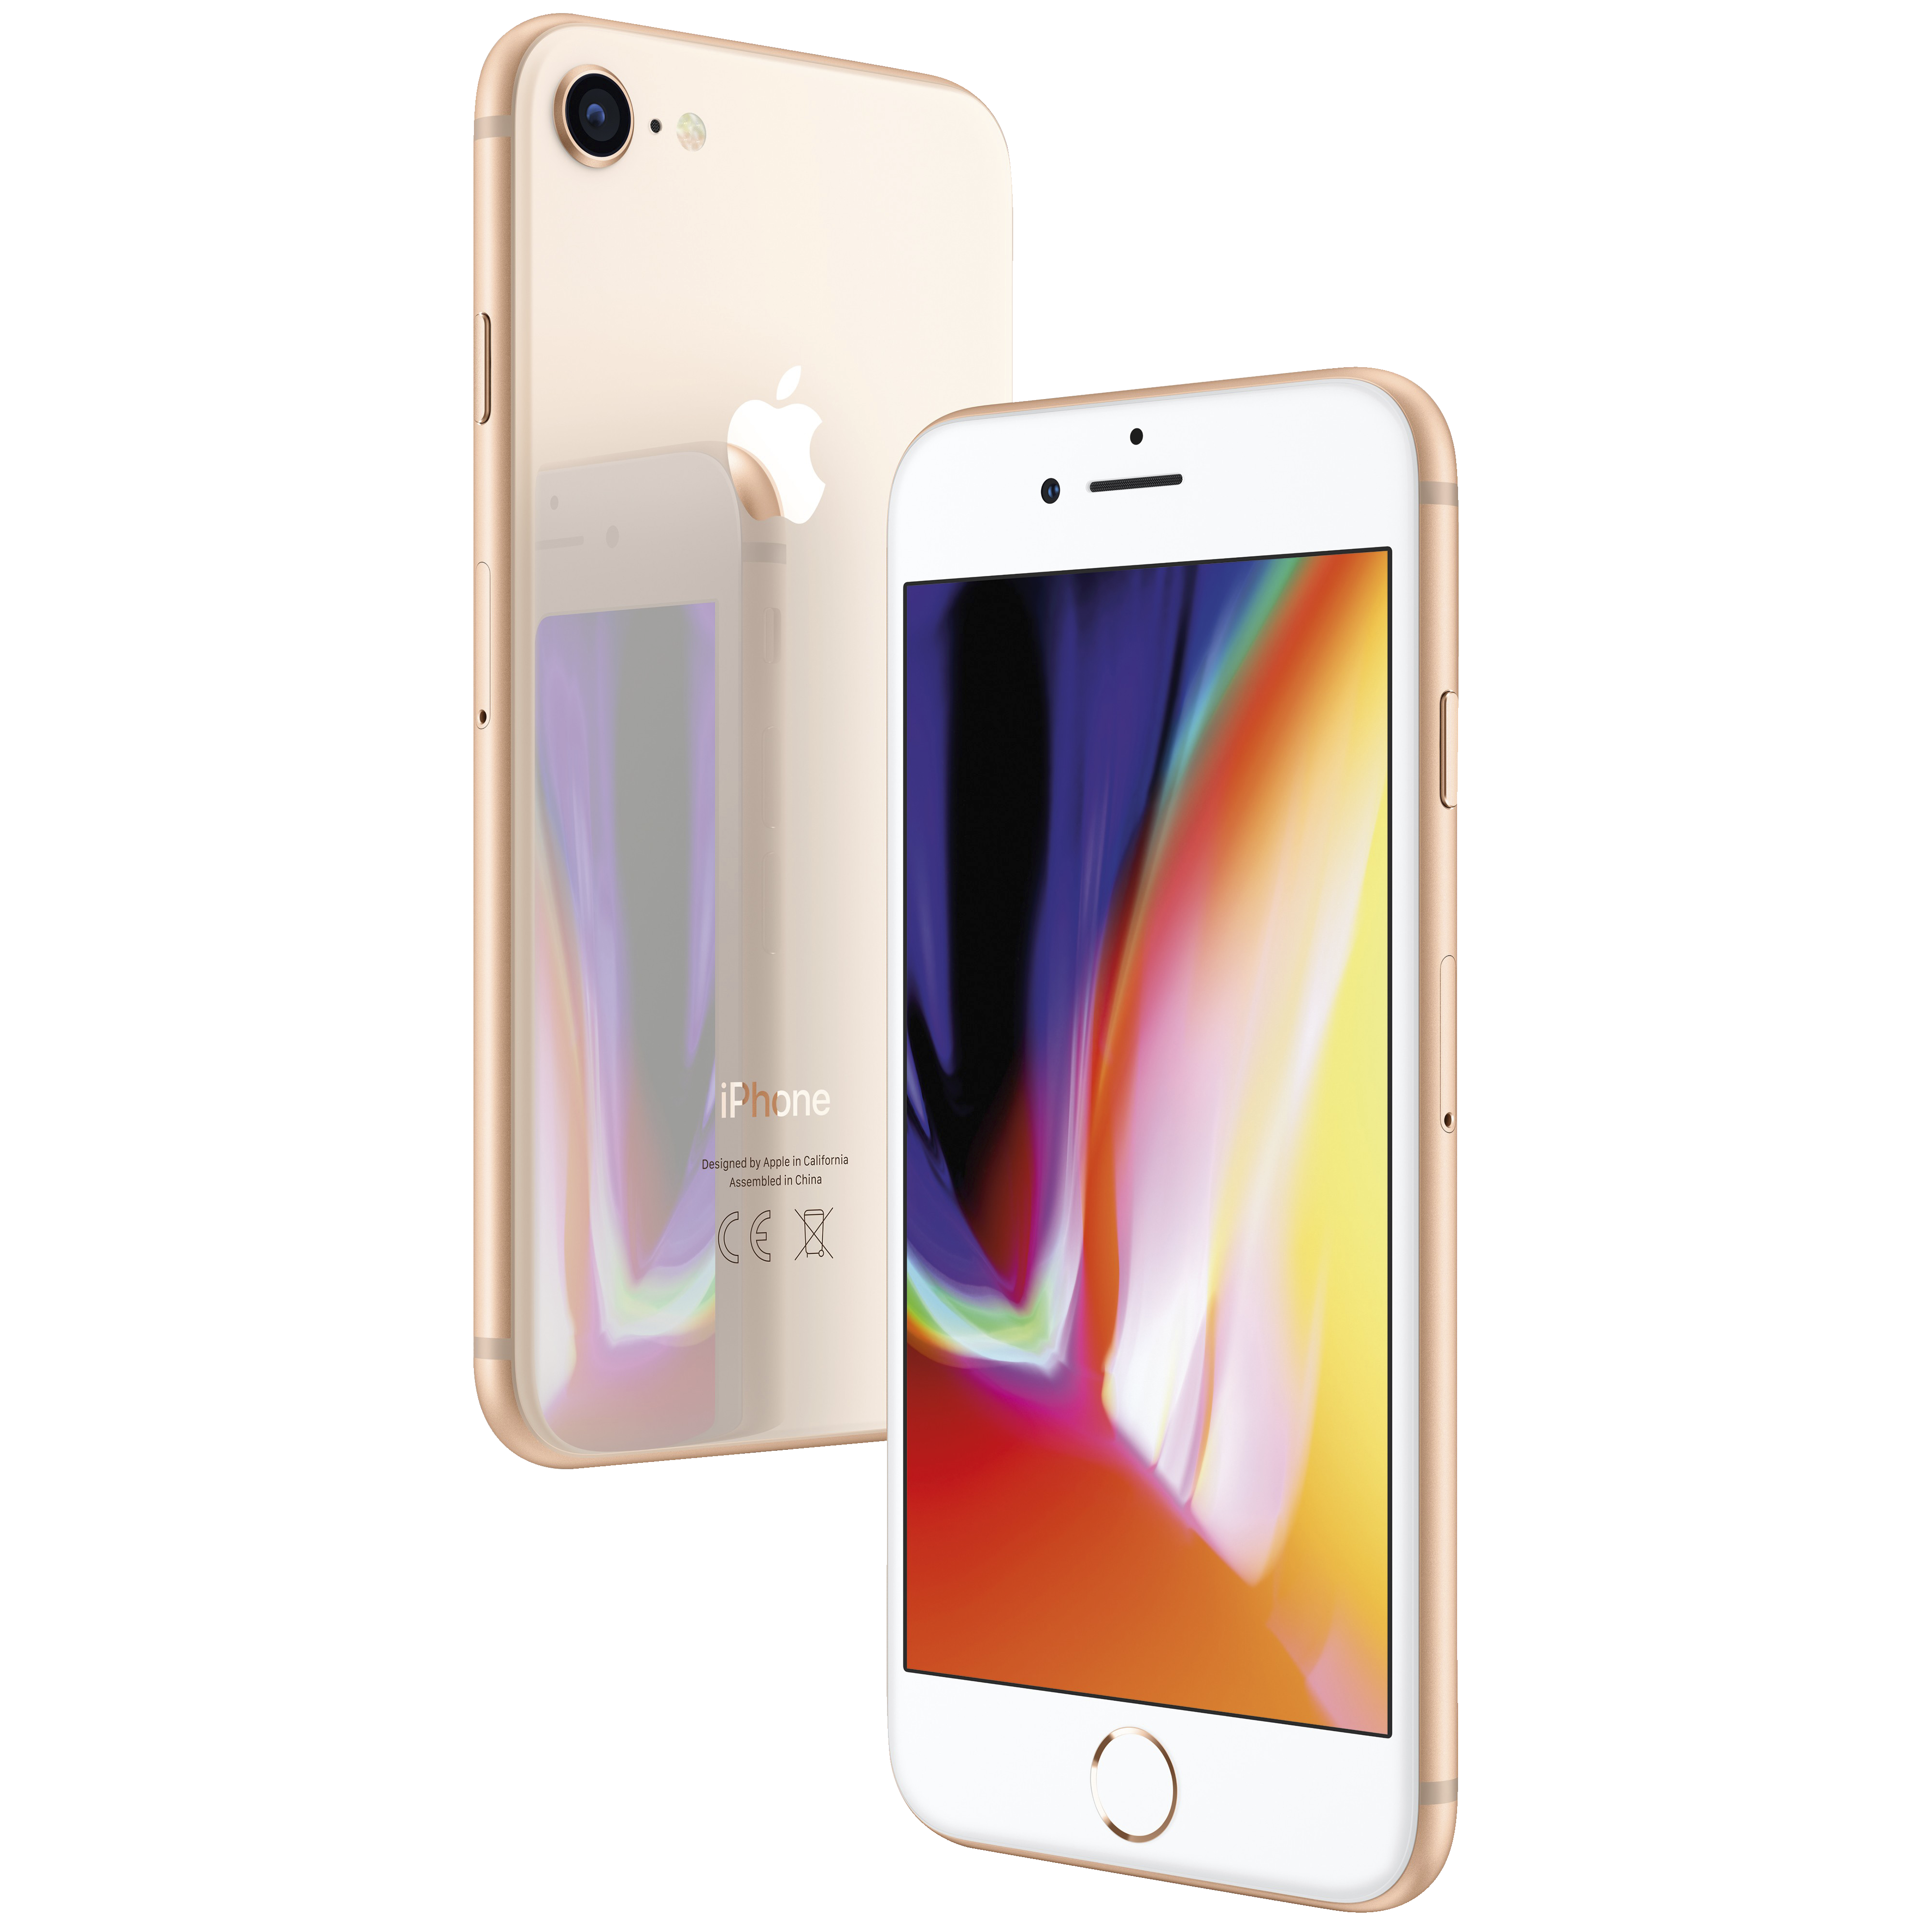 iPhone 8 64GB (guld) - Mobiltelefoner - Elgiganten